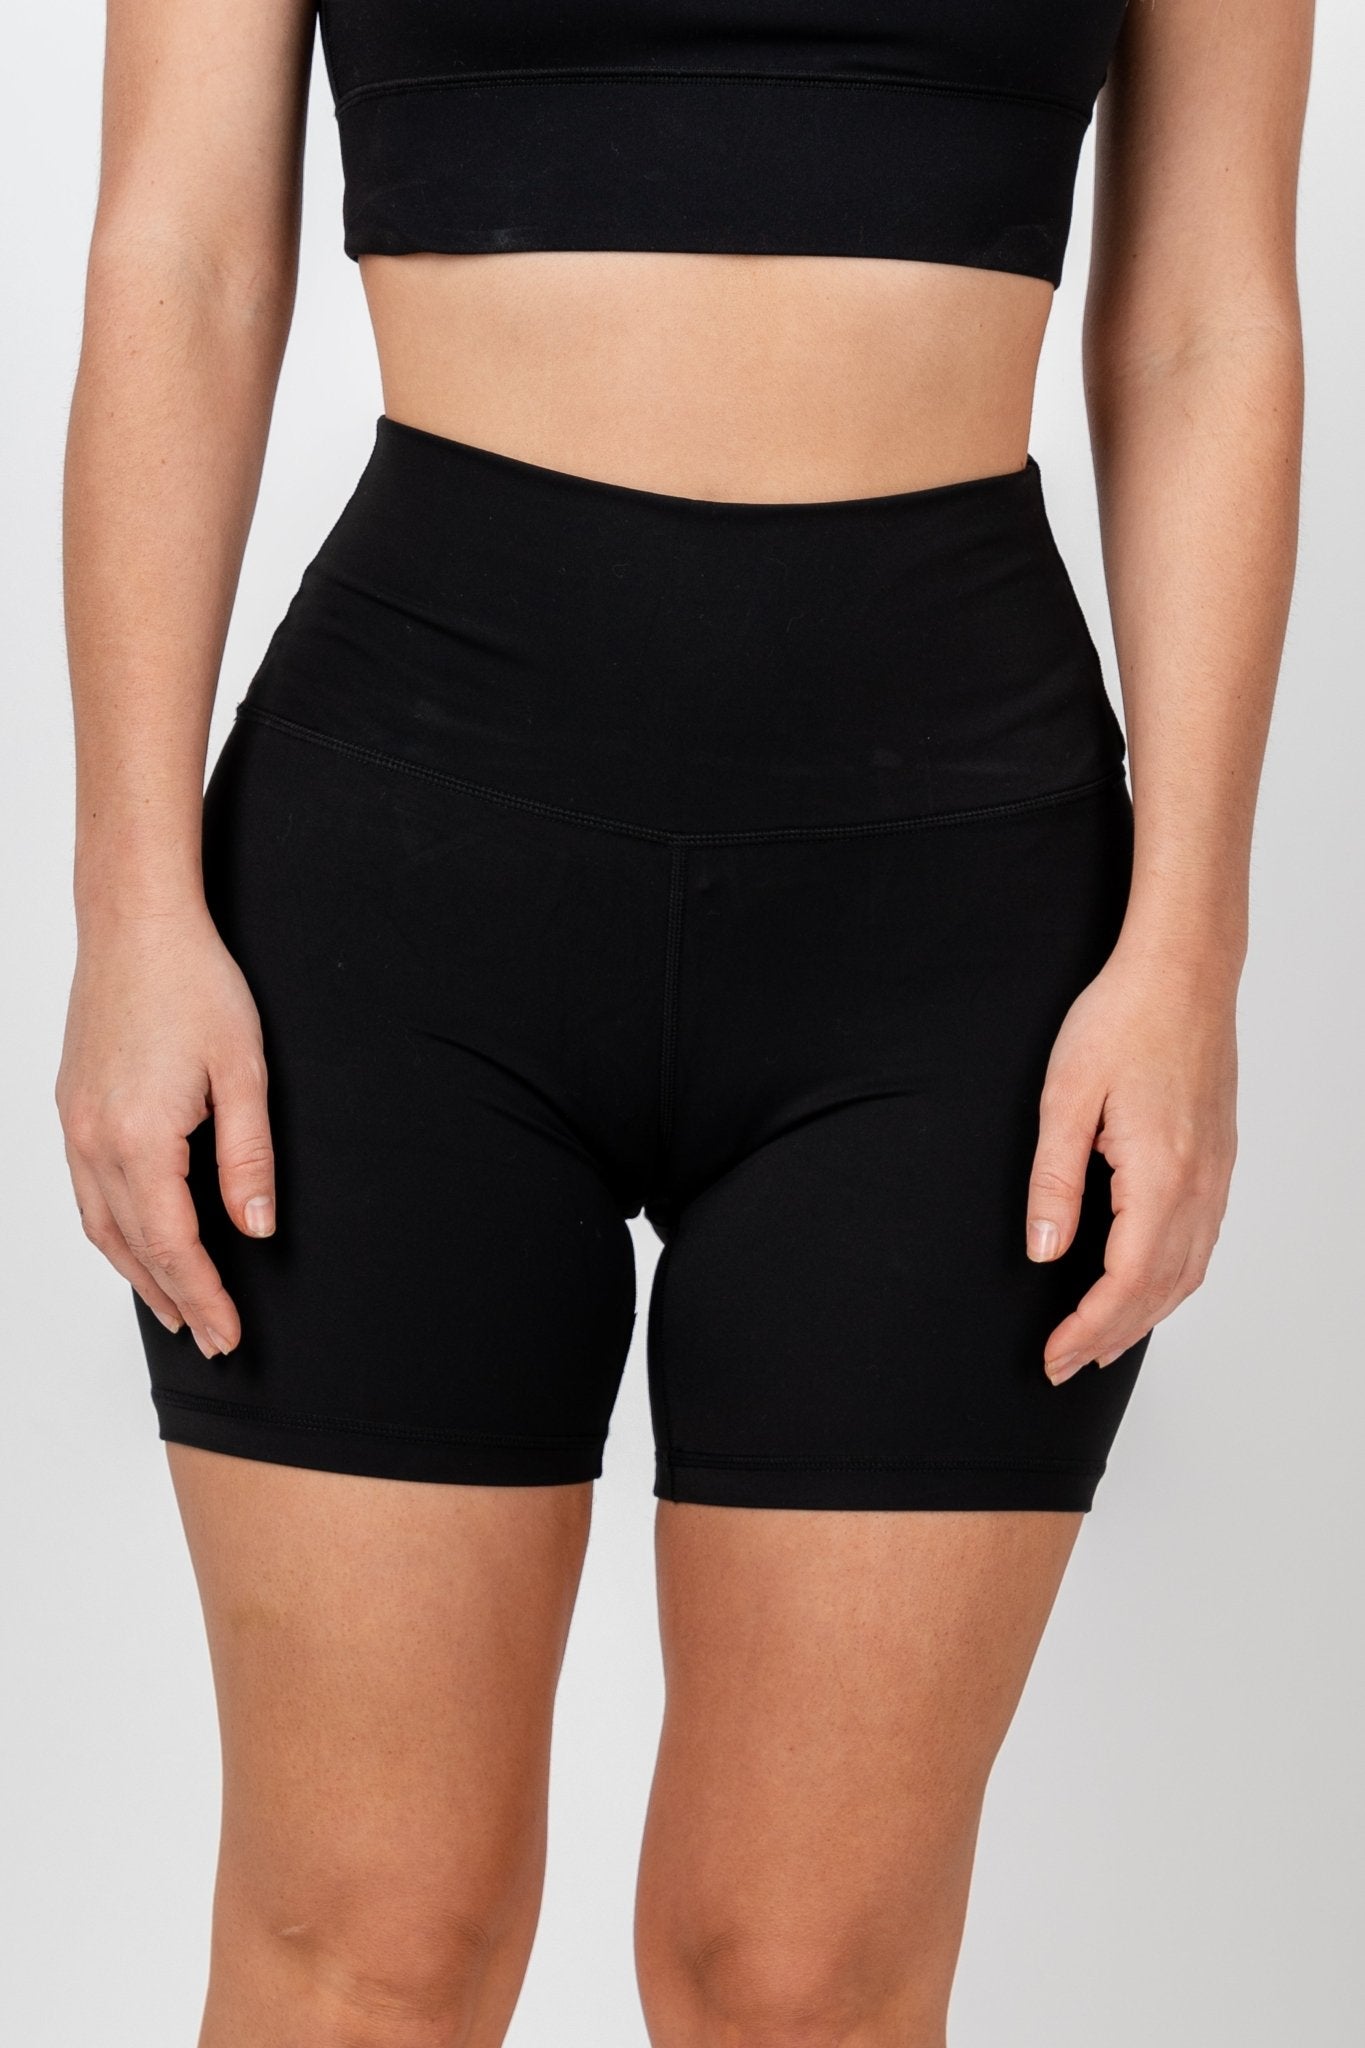 6 inch inseam biker shorts black  Trendy Shorts - Lush Fashion Lounge